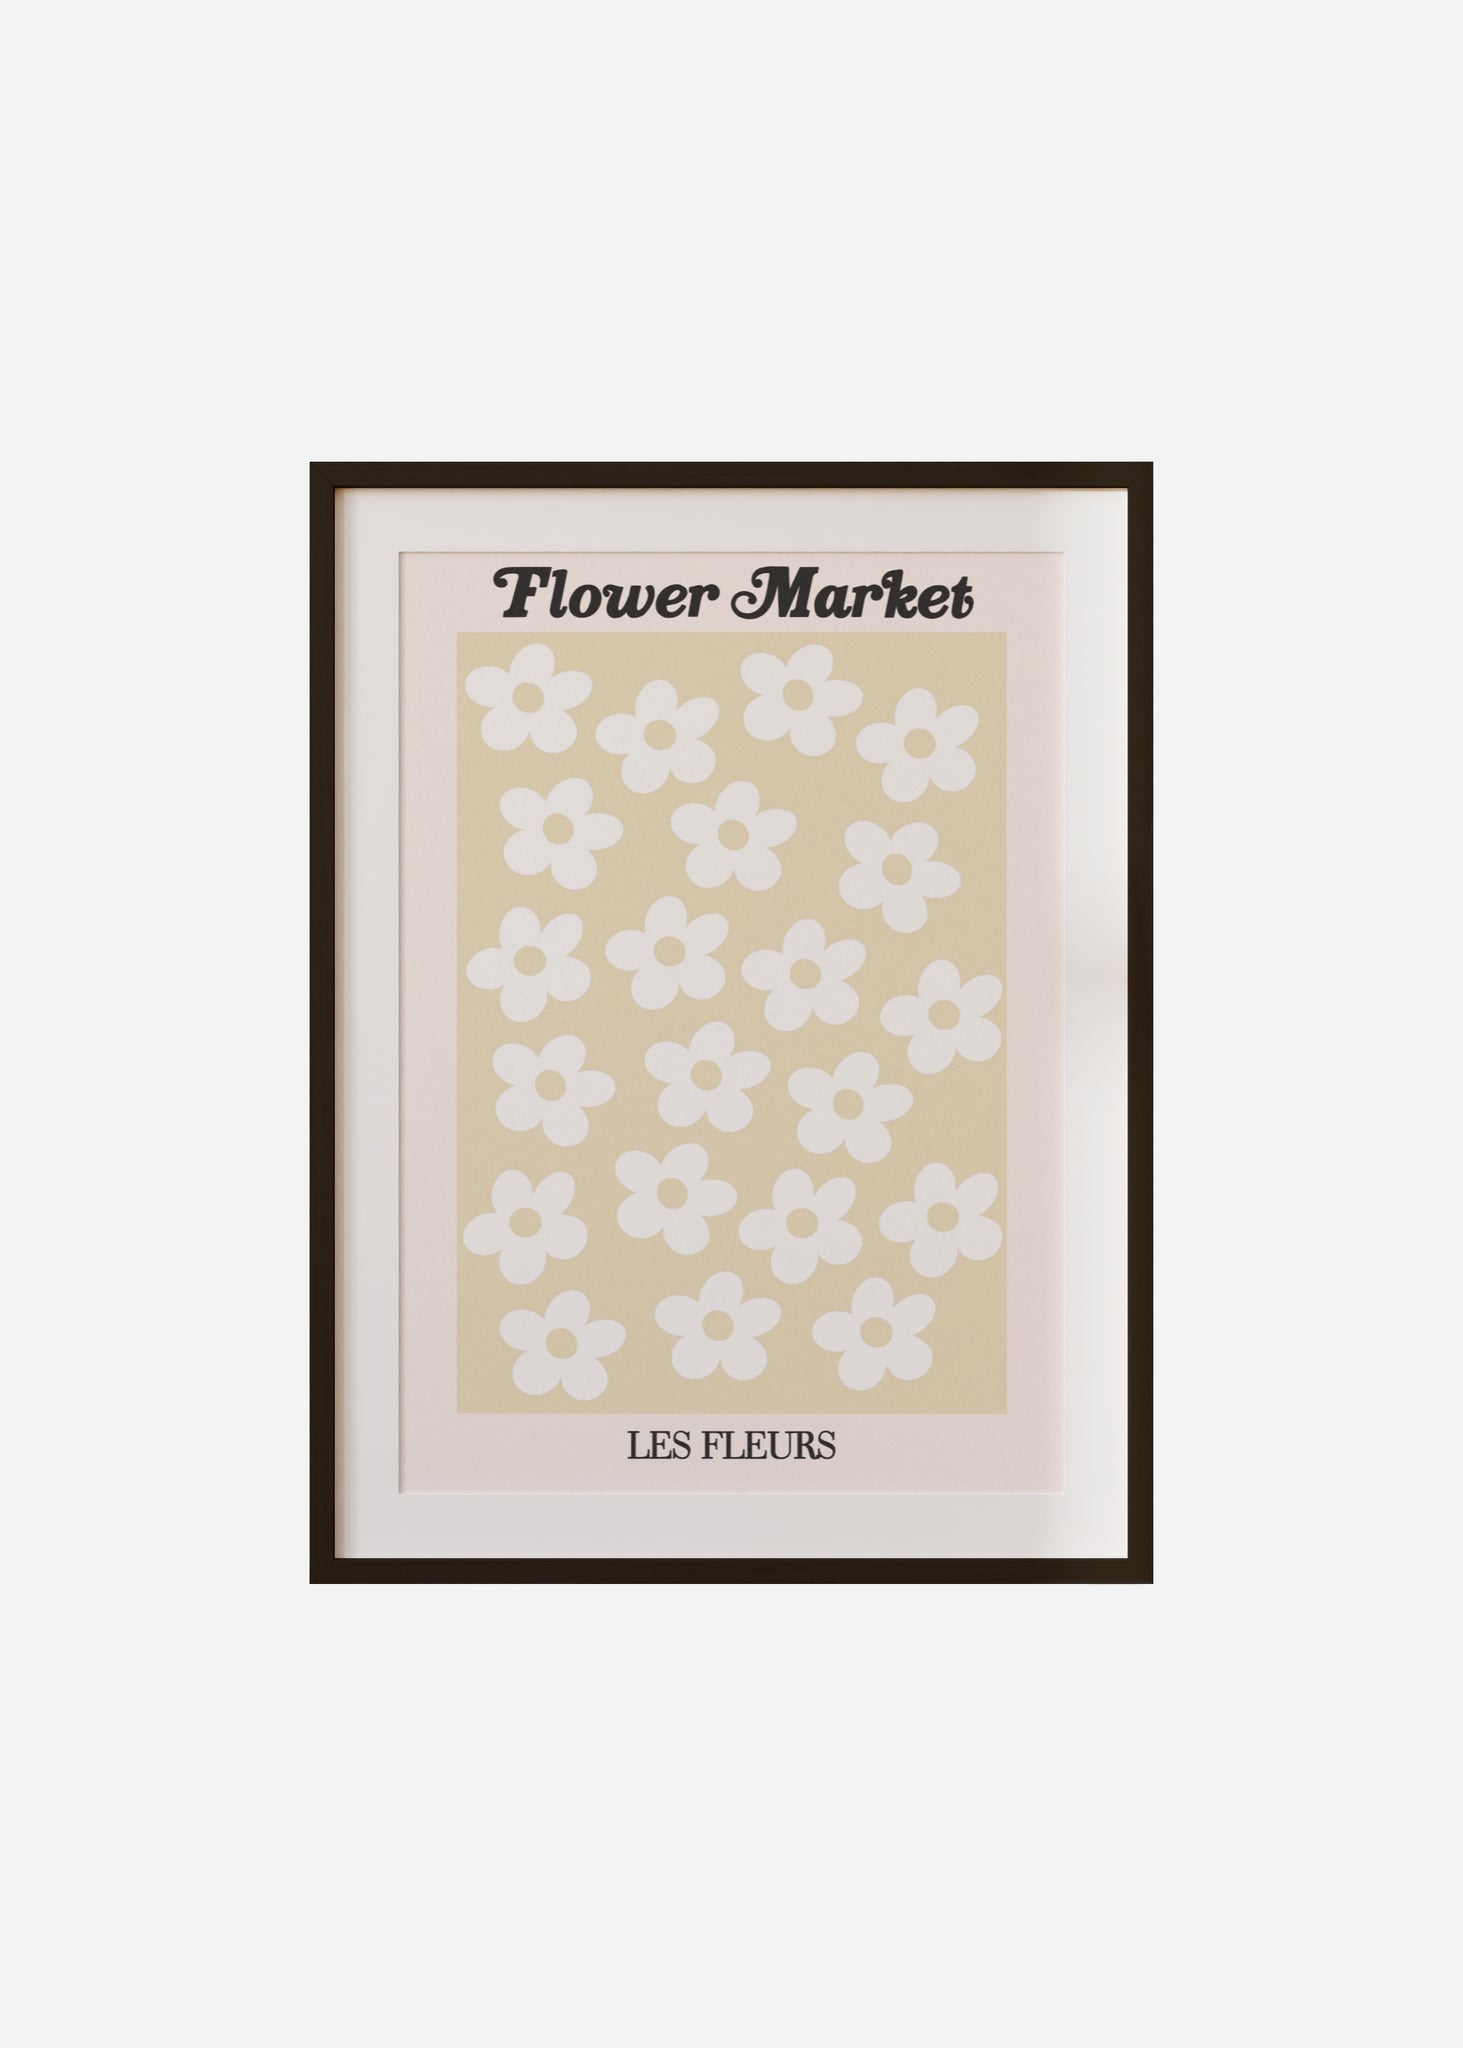 flower market / les fleurs Framed & Mounted Print